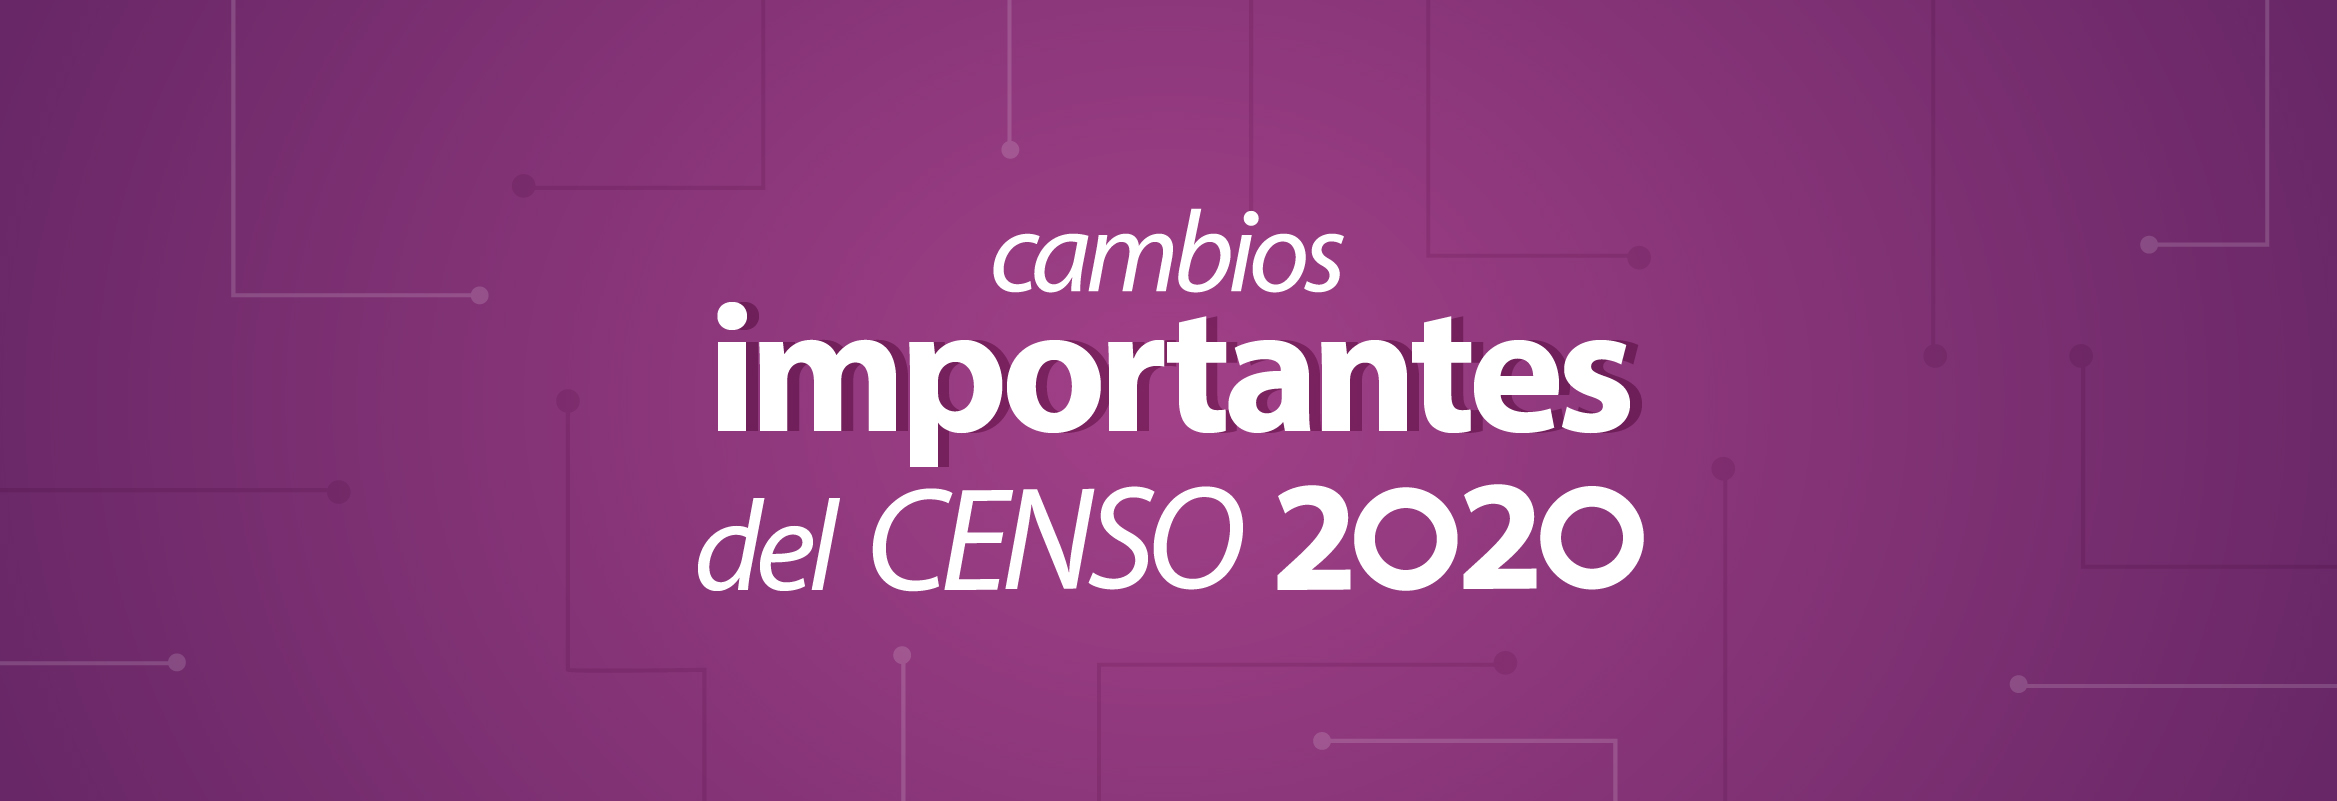 TEXTO BLANCO SOBRE FONDO MORADO: Cambios importantes del Censo 2020